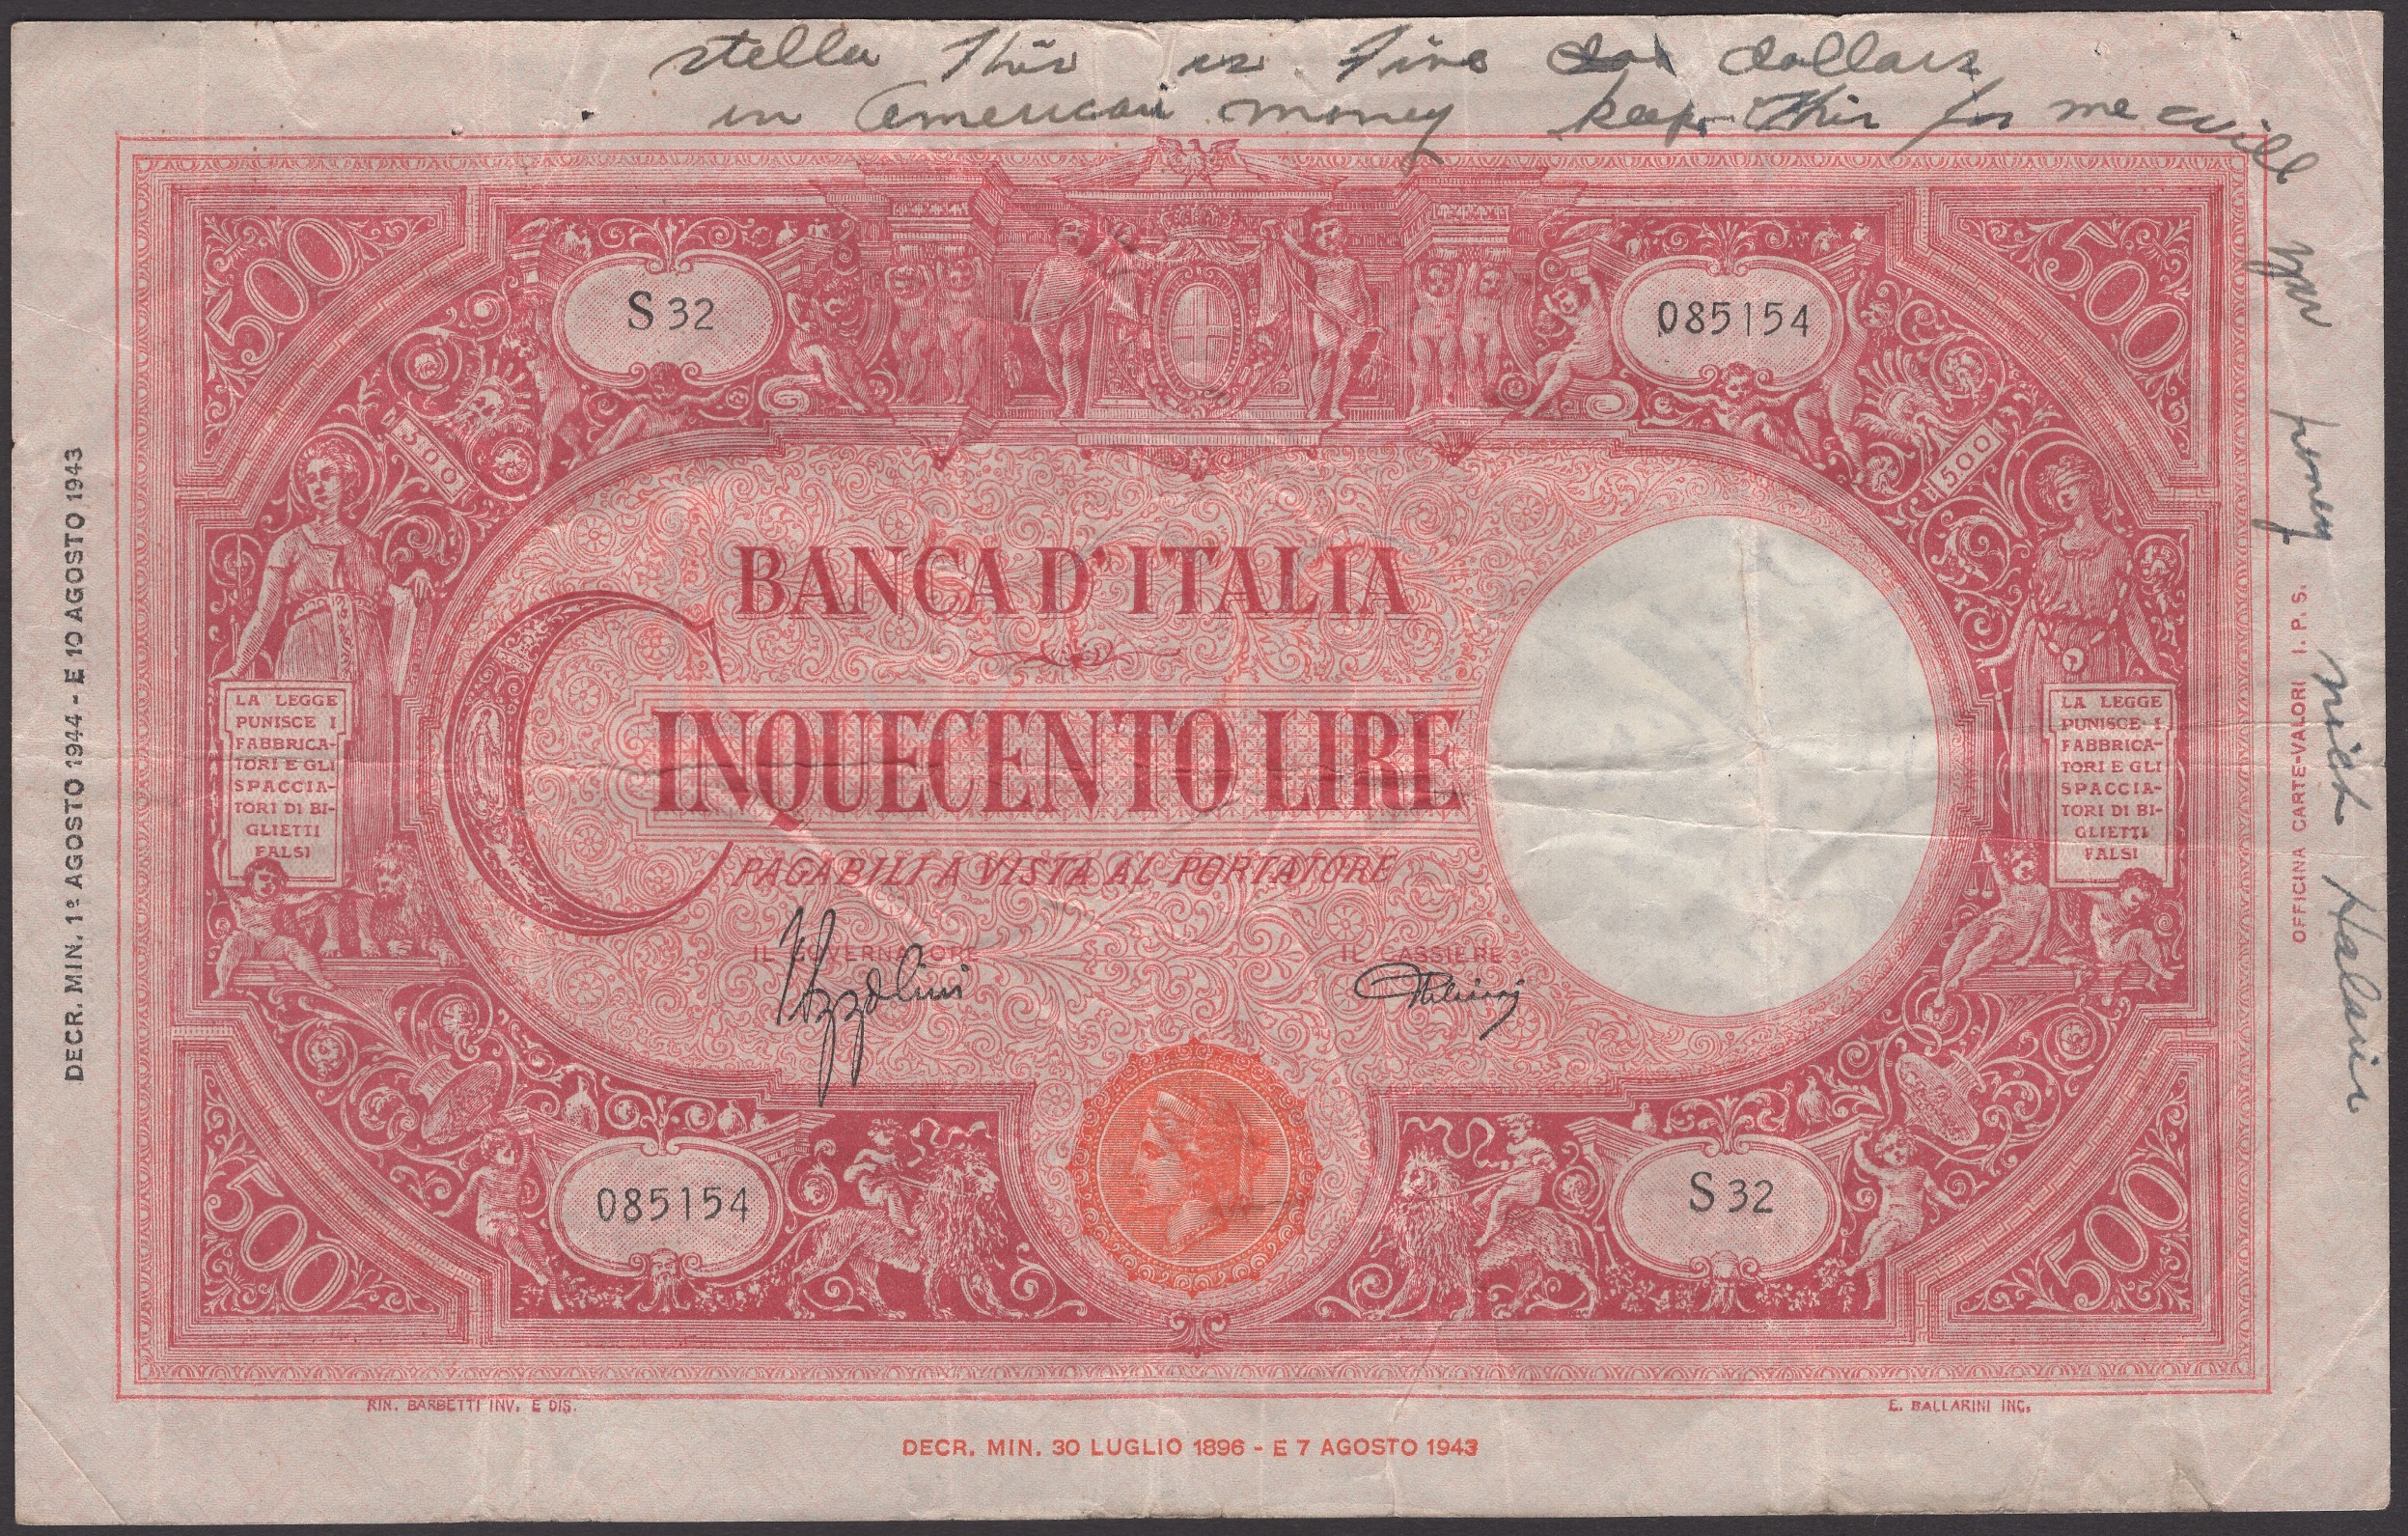 Banca d'Italia, 500 Lire, 1 August 1944, serial number S32 085154, Azzolini and Urbini...